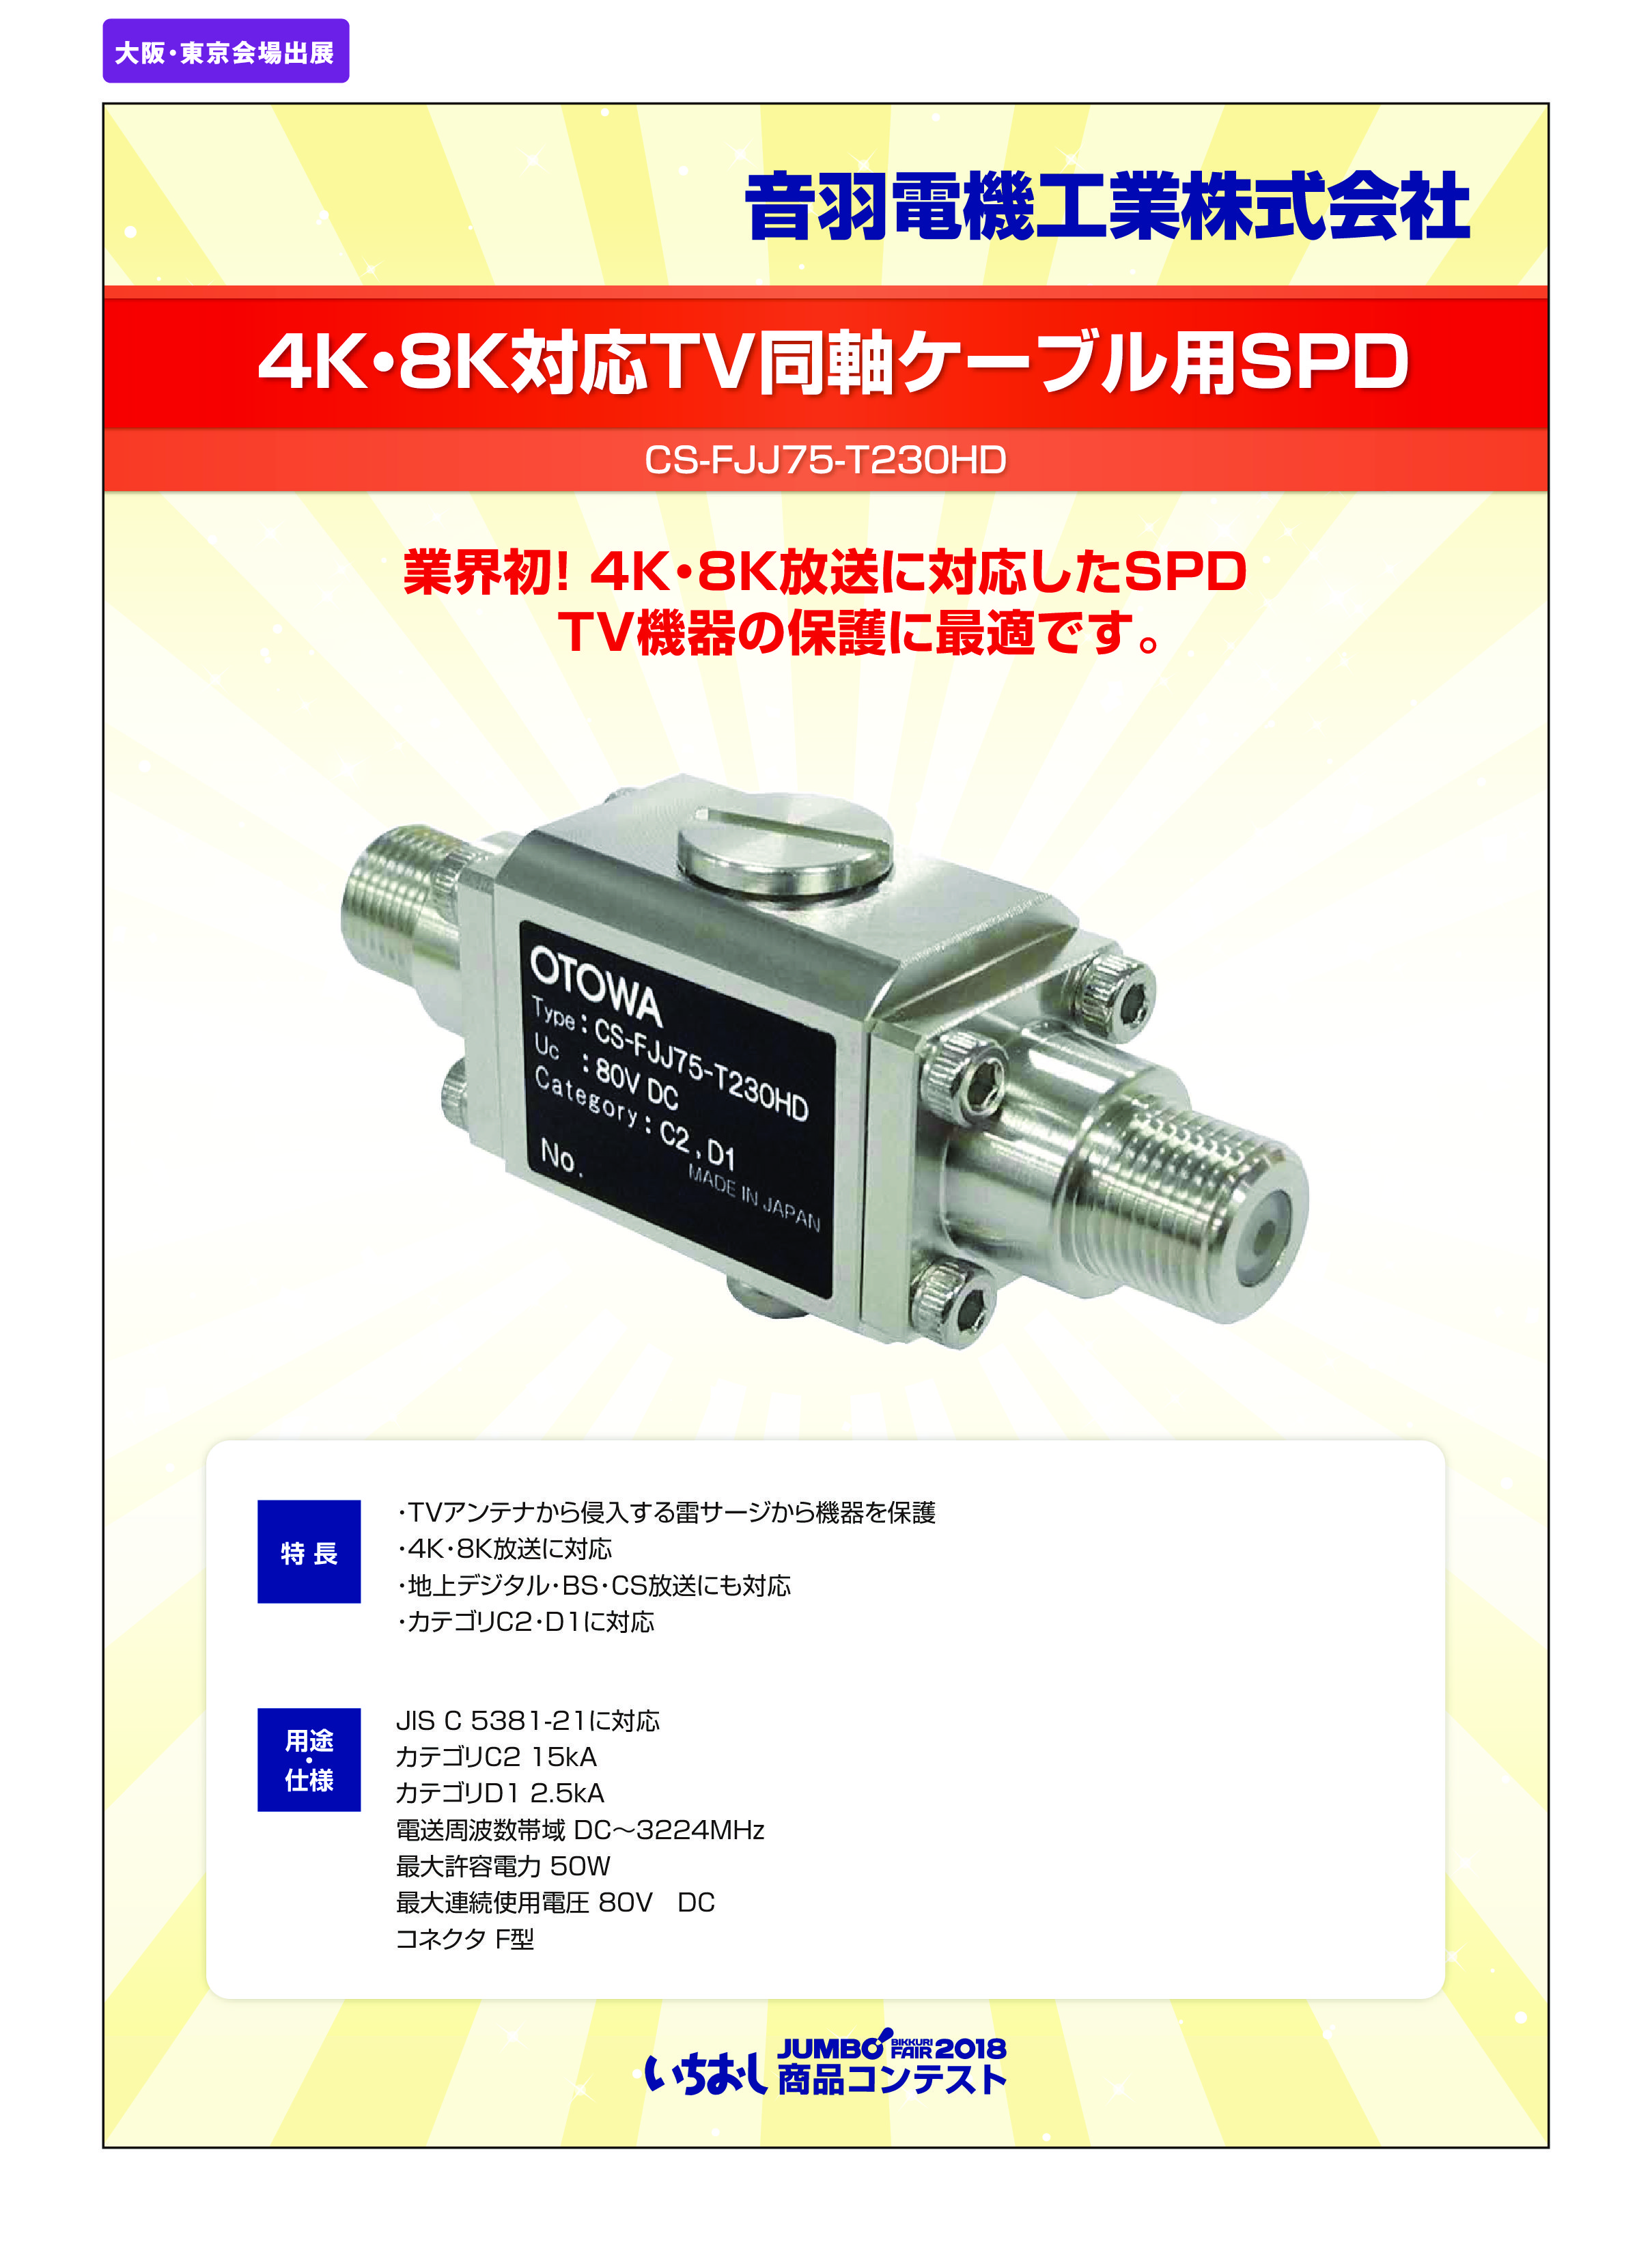 「4K・8K対応TV同軸ケーブル用SPD」音羽電機工業株式会社の画像